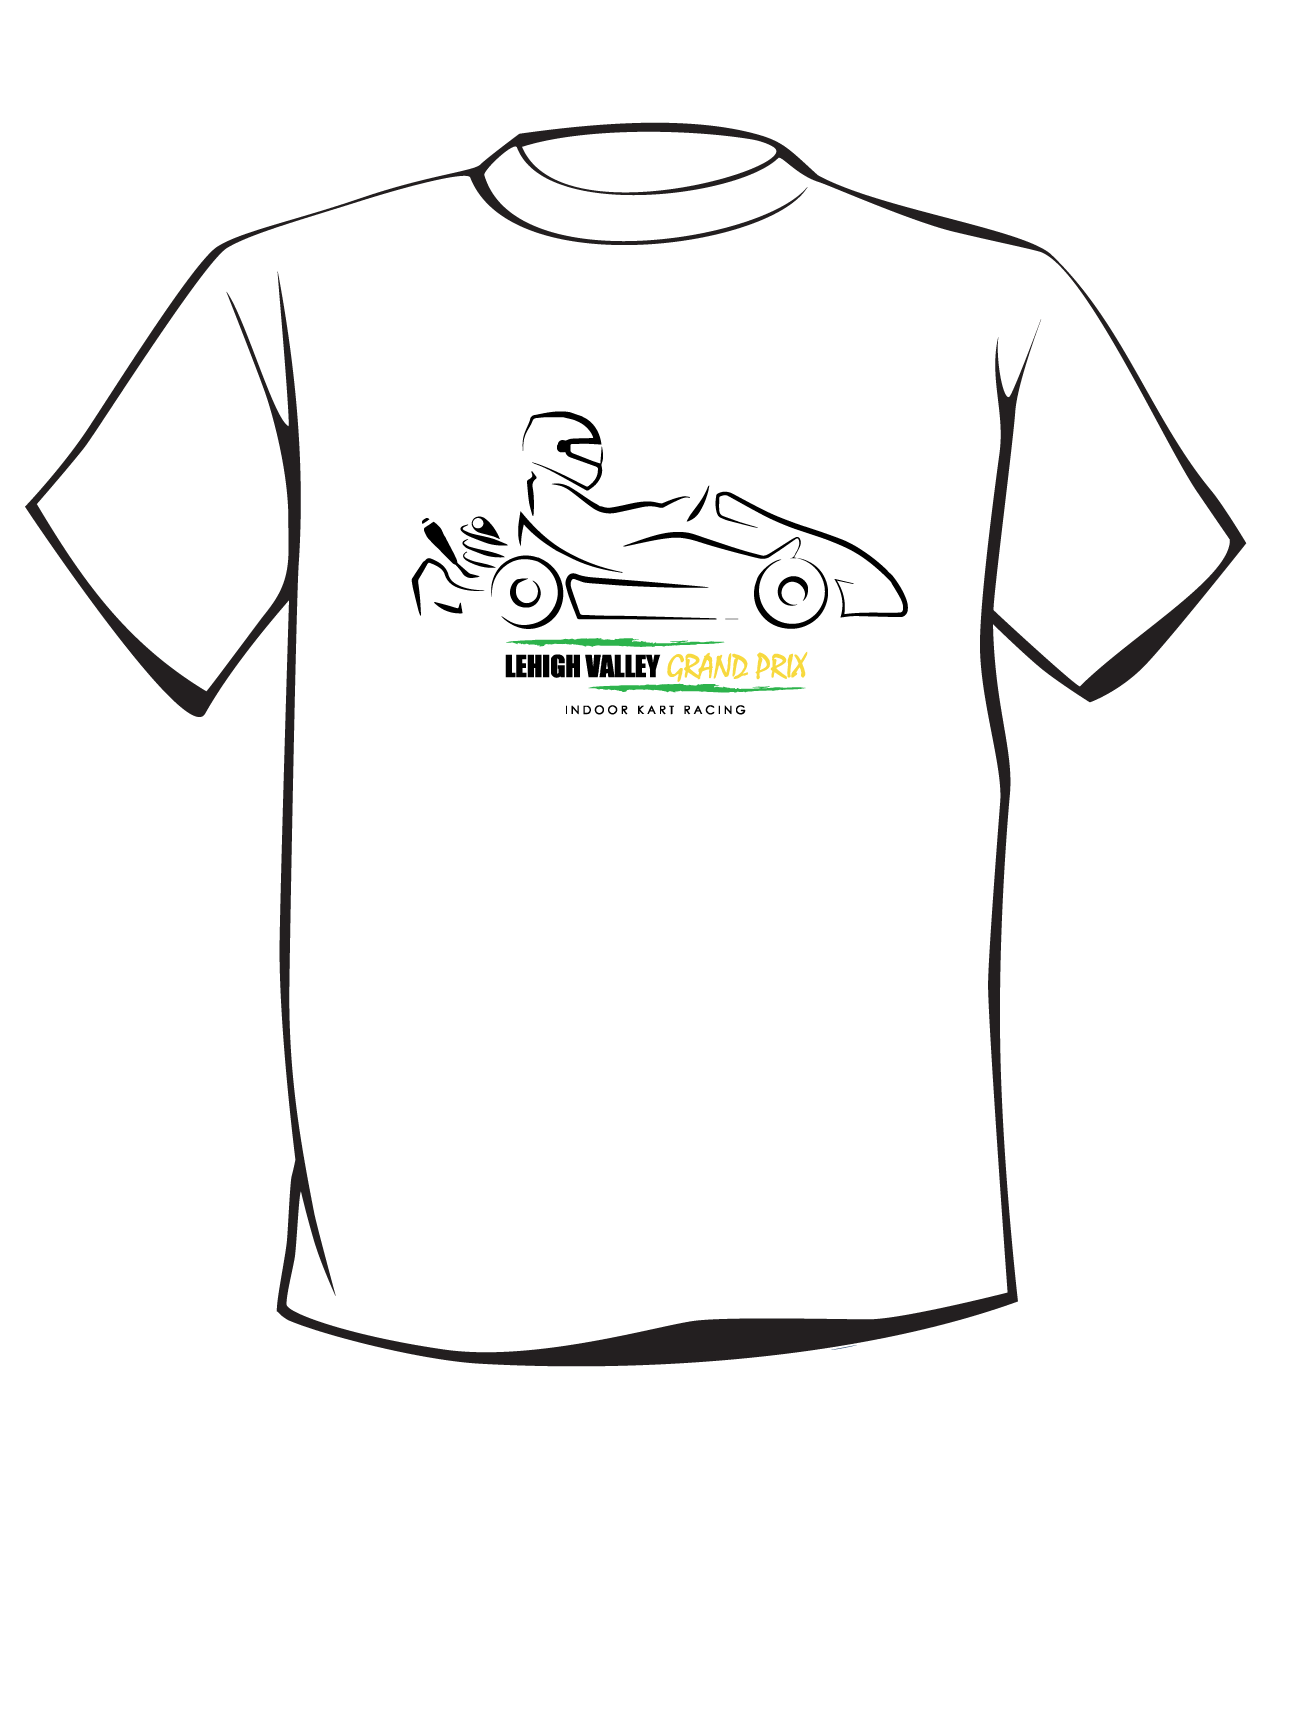 Lehigh Valley Grand Prix T Shirt Design